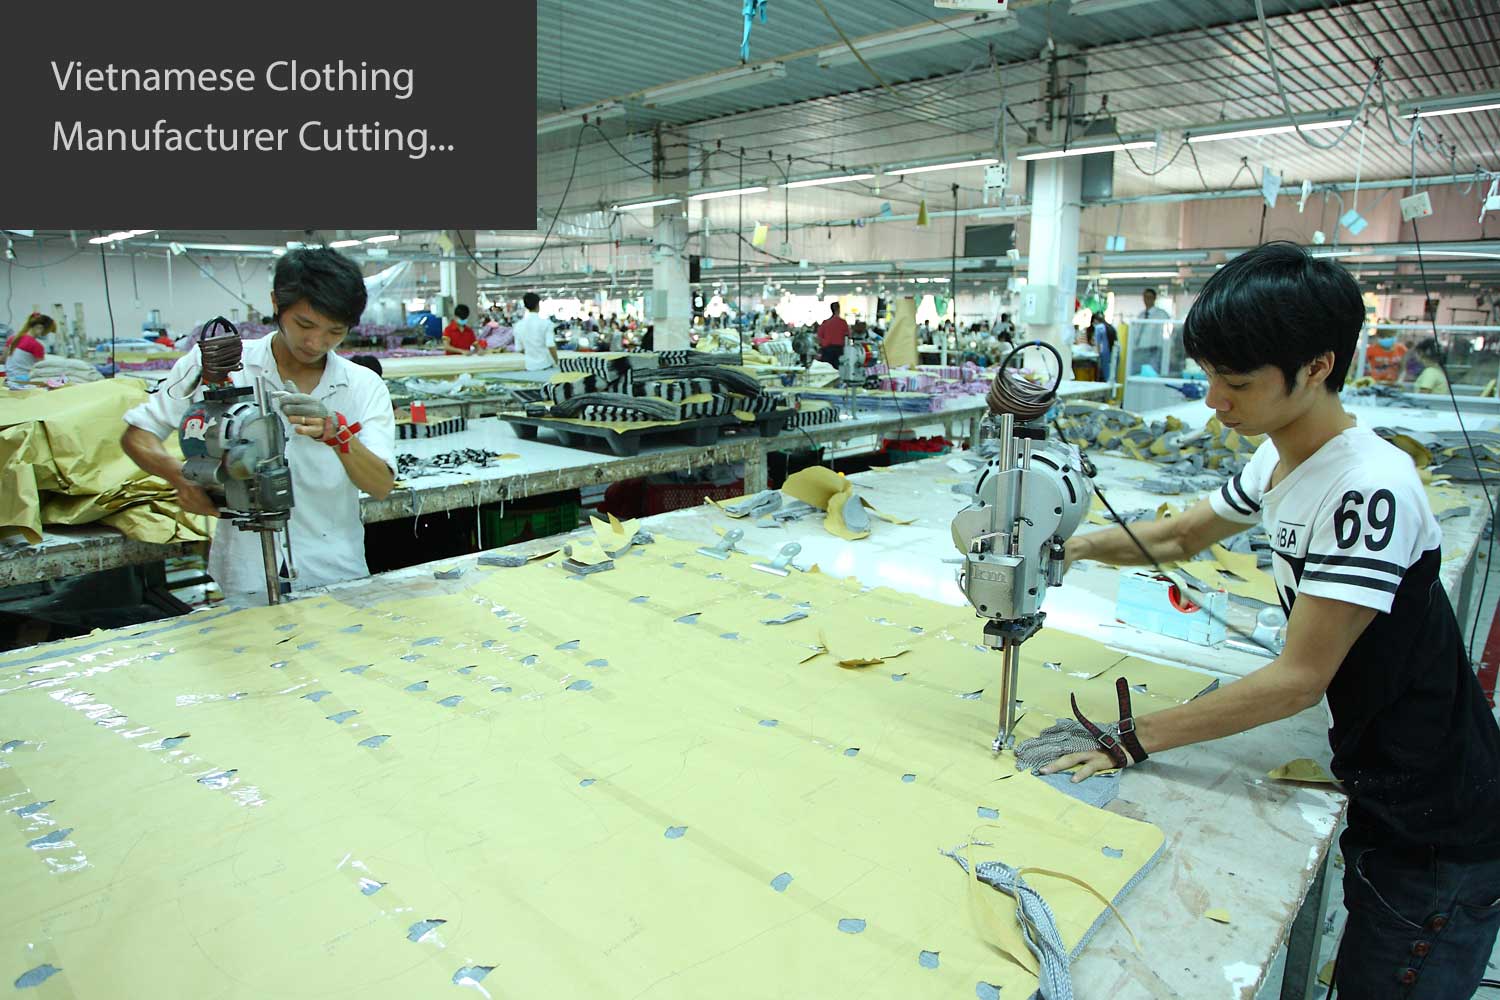 We introduce Vietnam clothing manufacturers